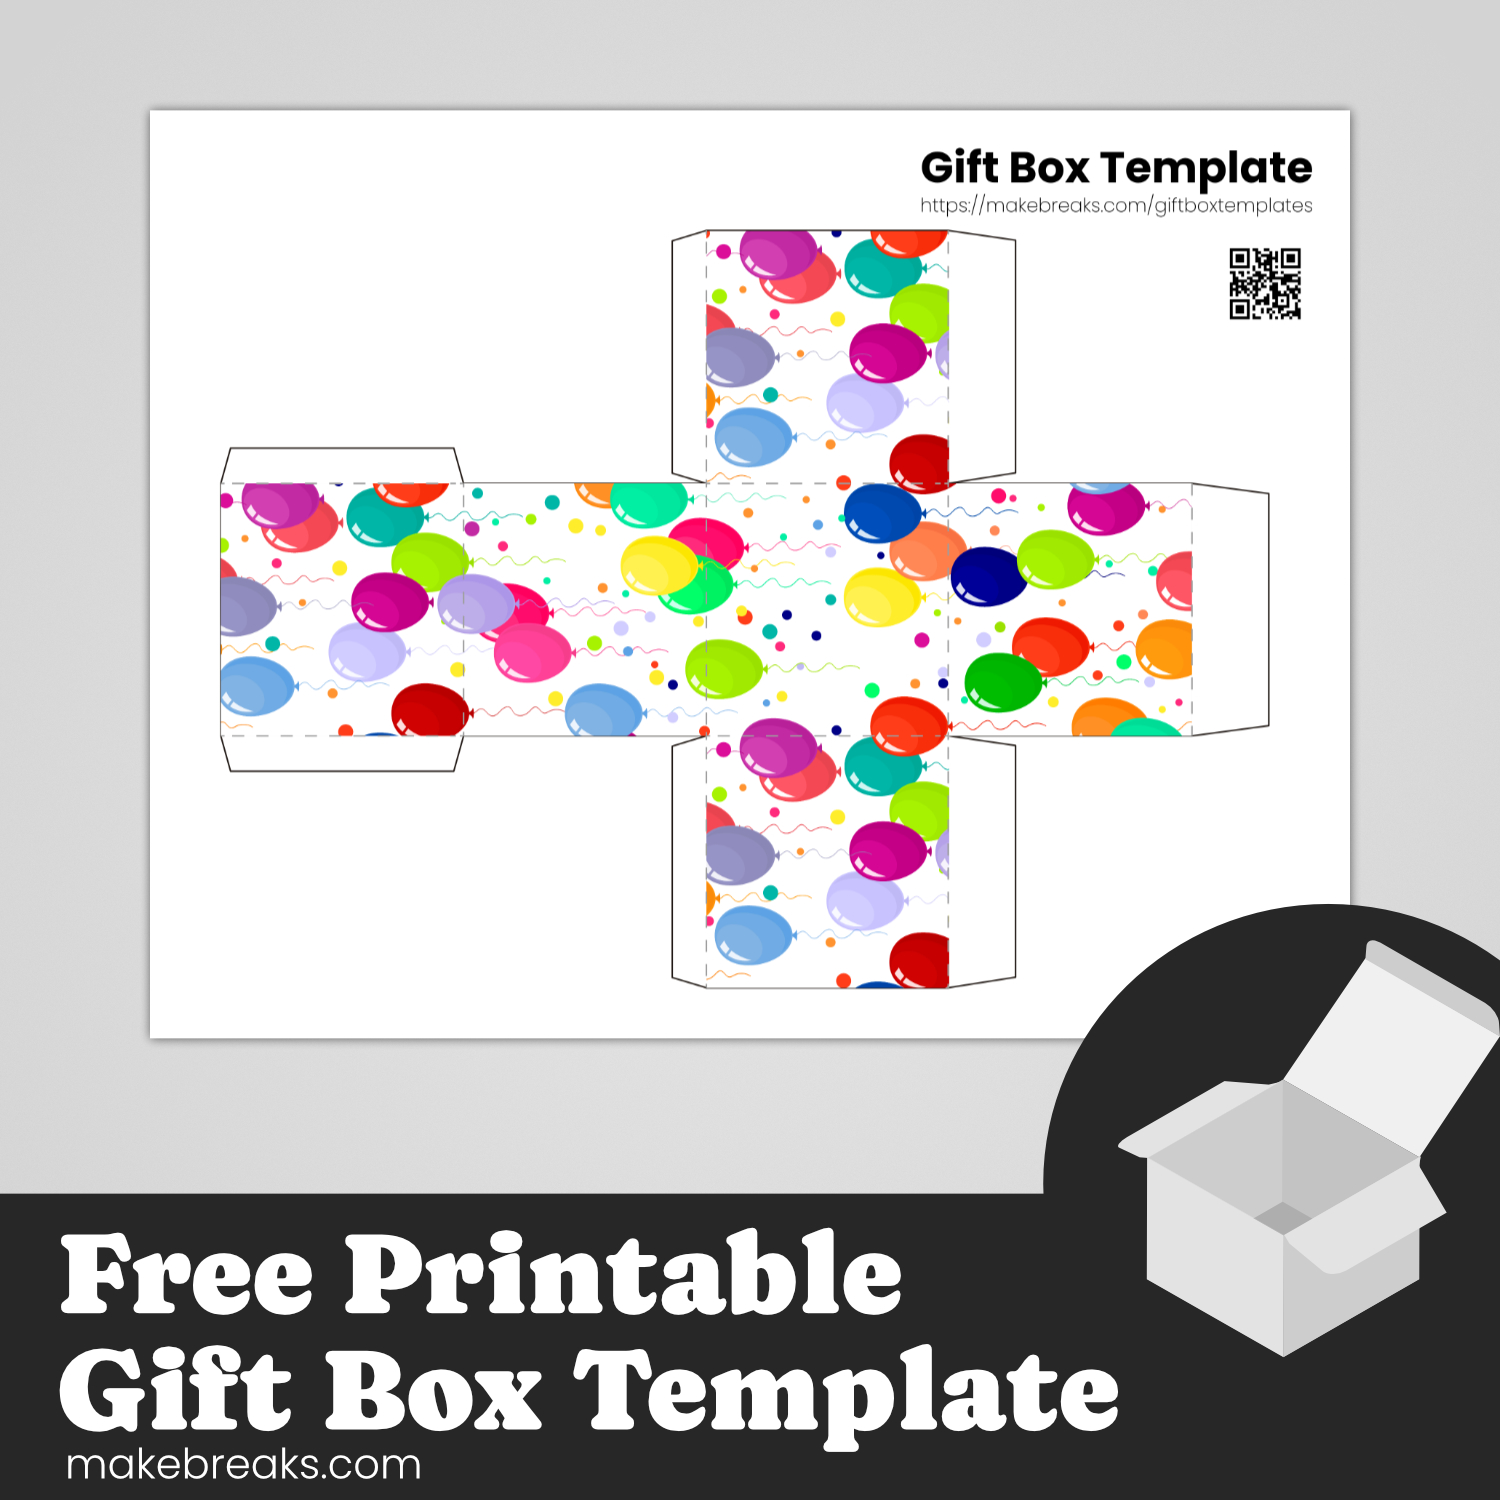 Free Printable Gift Box With Balloon Design